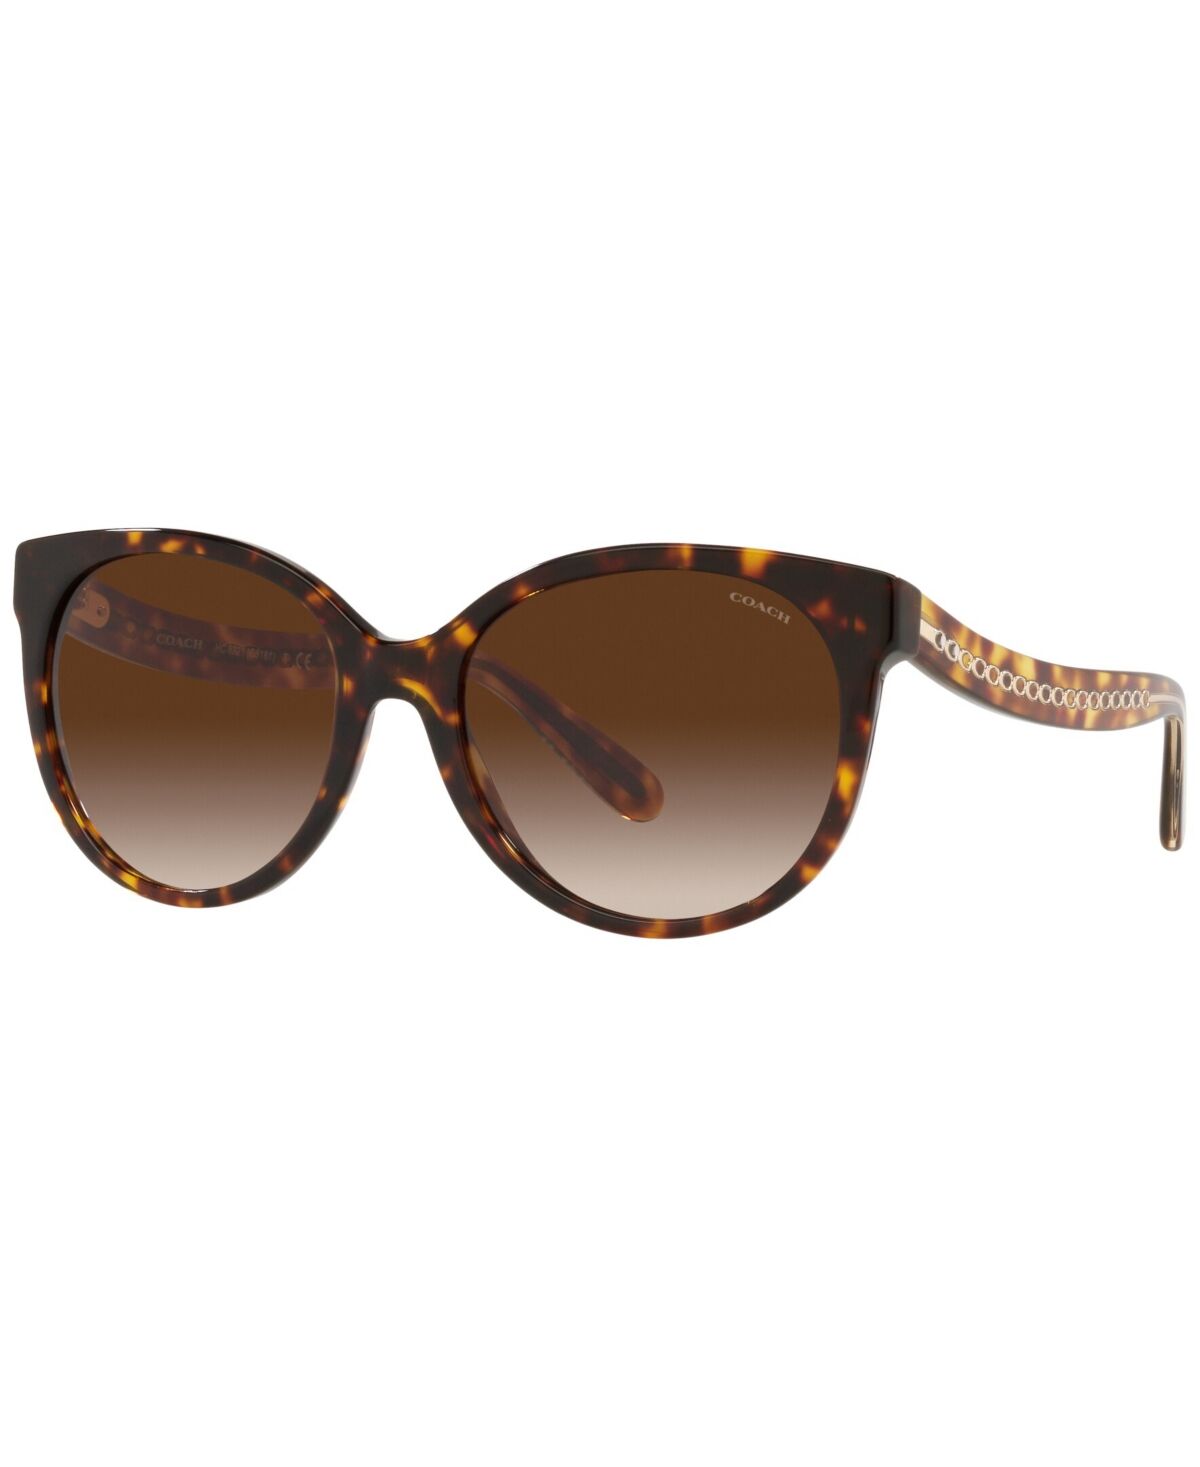 Coach Women's Sunglasses, HC8321 - Dark Tortoise